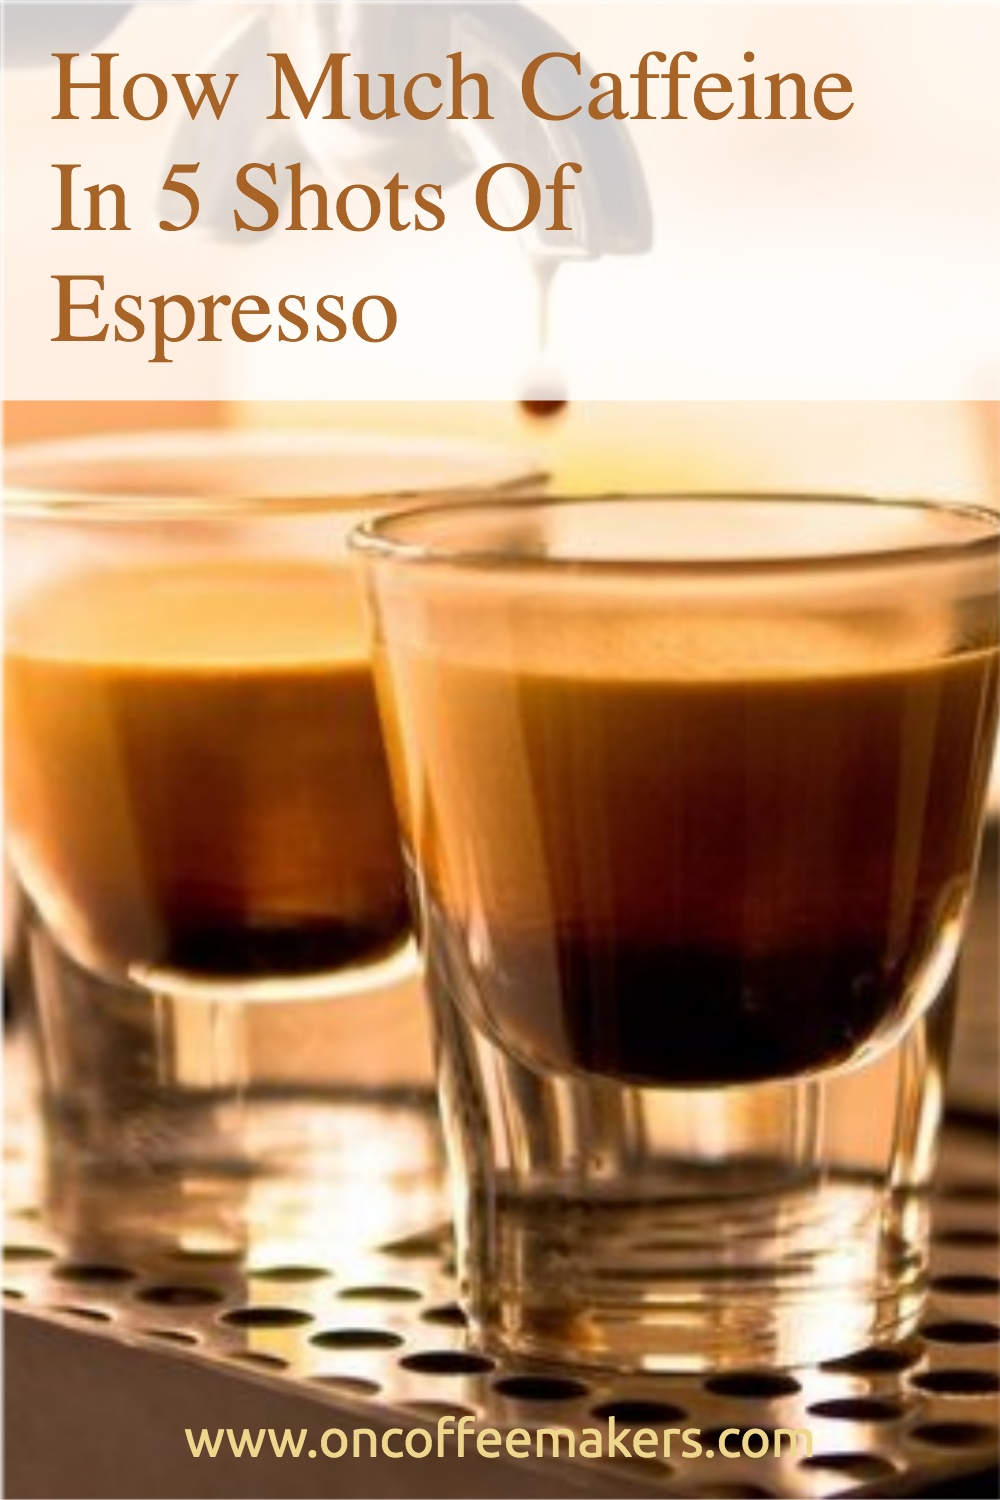 How Much Caffeine in 5 Shots of Espresso? 